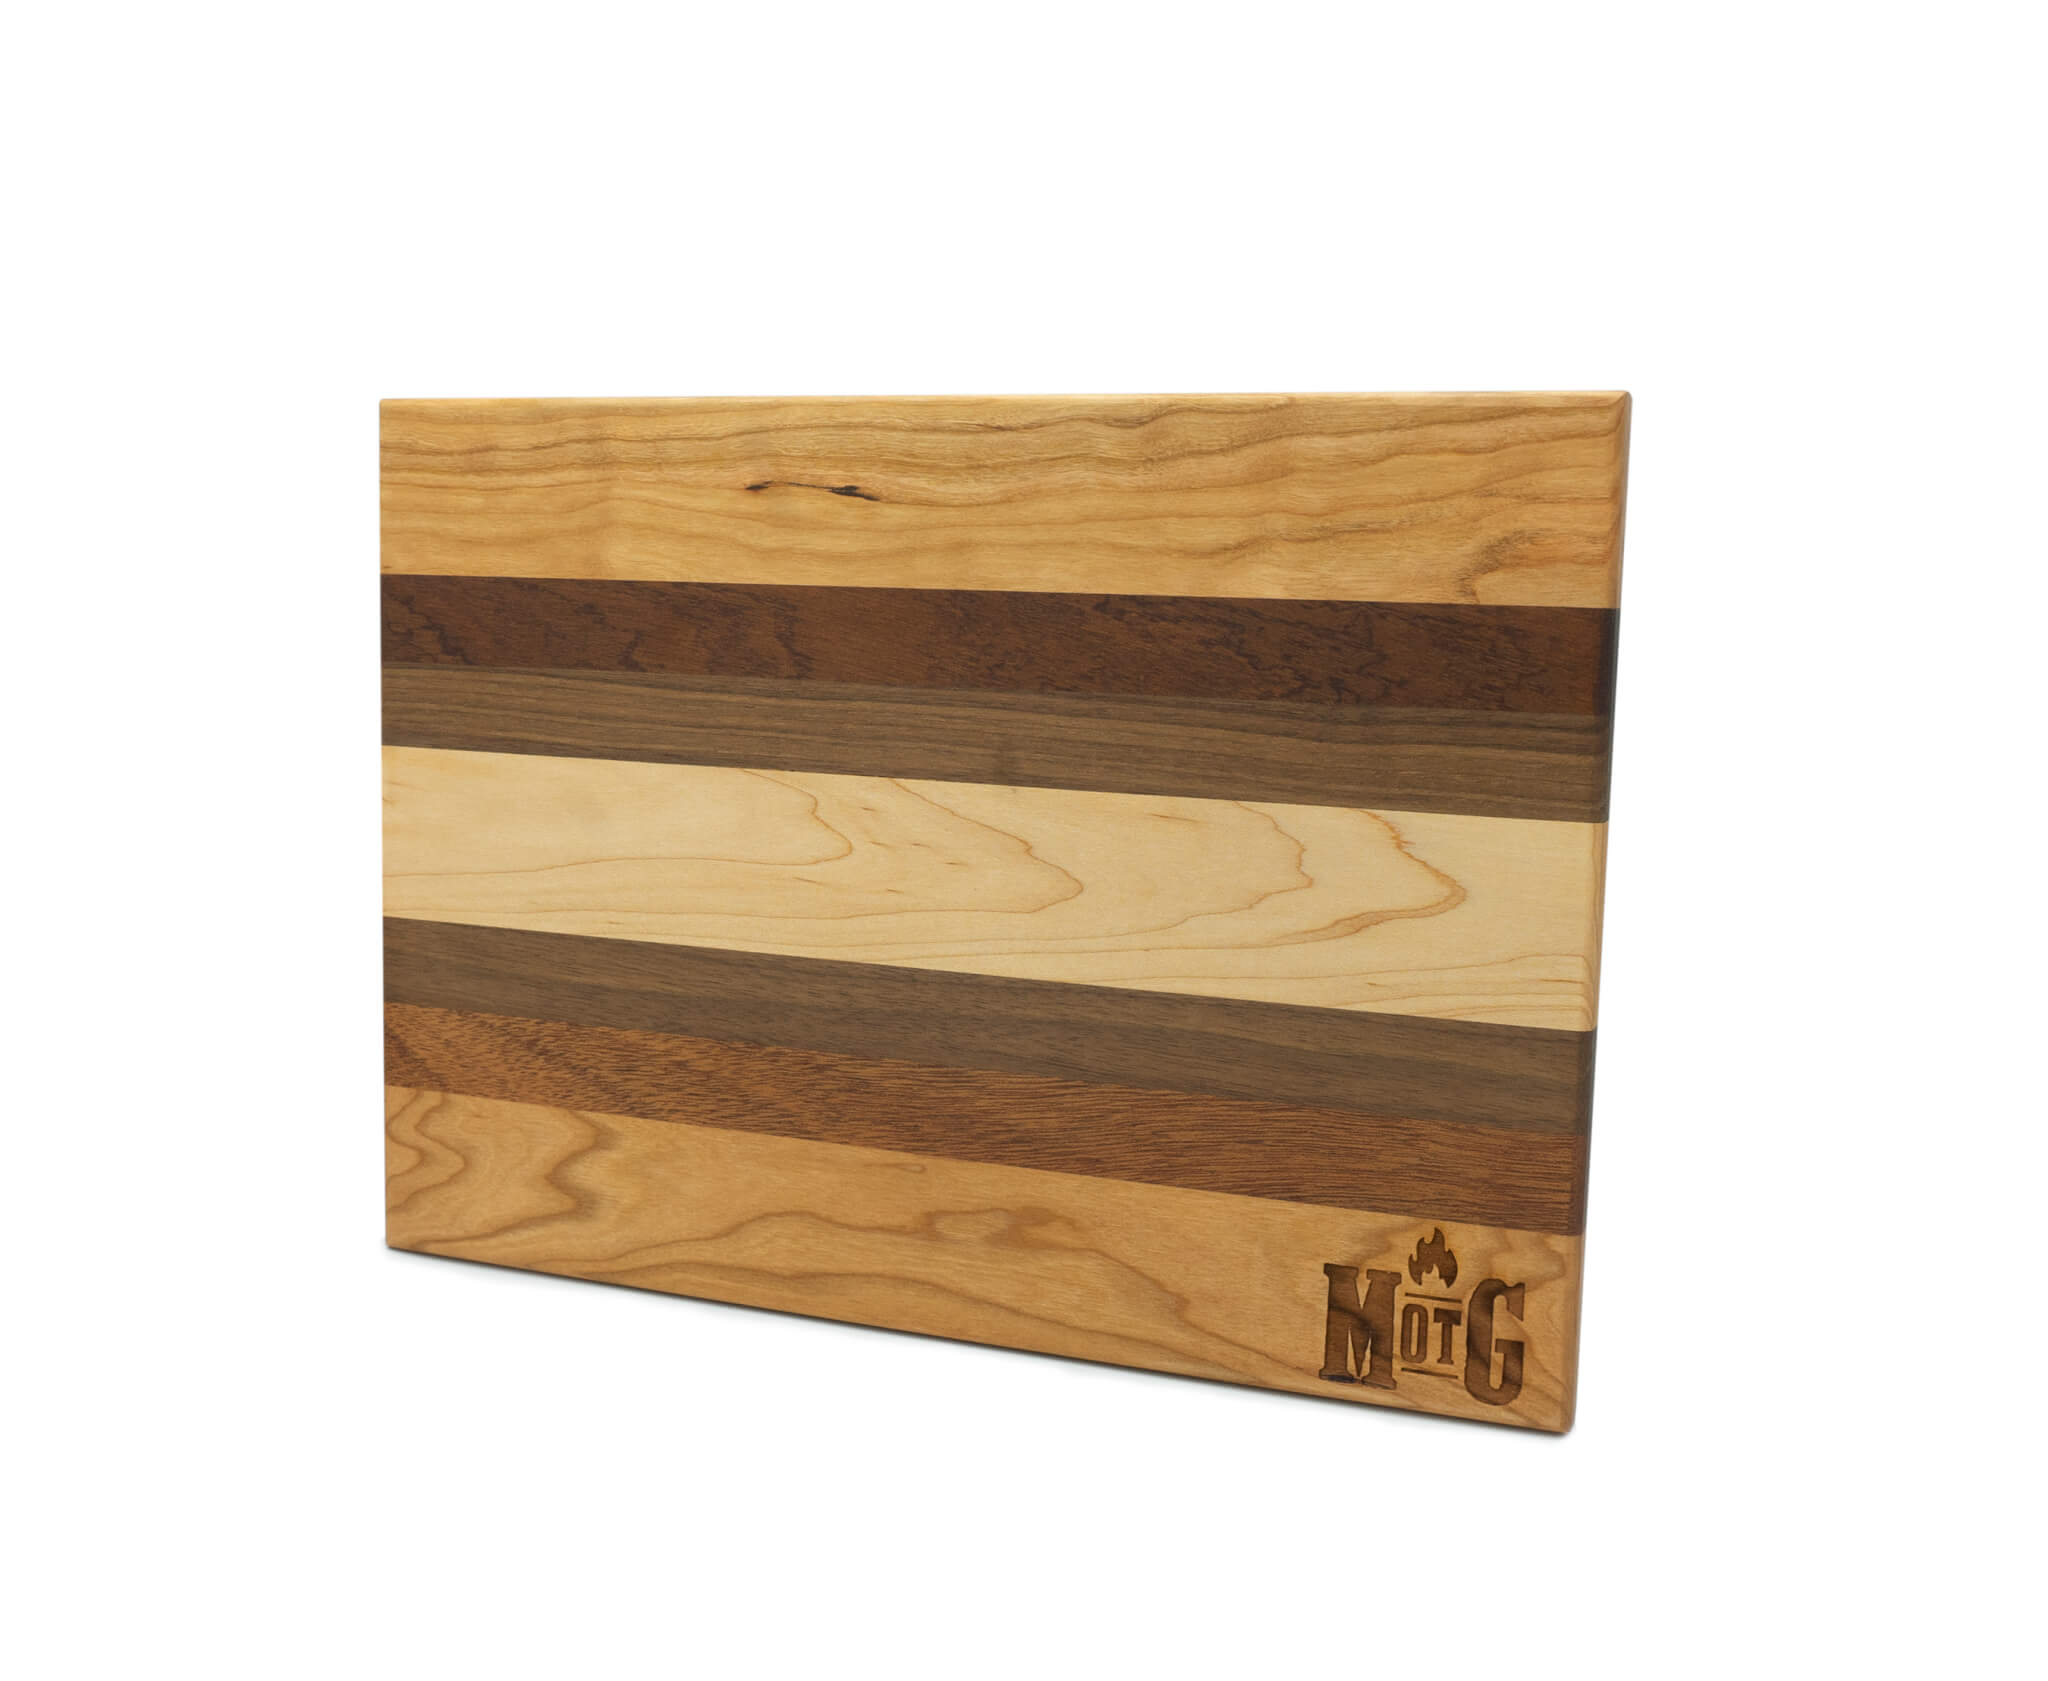 MOTG-FL581014 (Cutting Boards 5-8 x 10 x 14 with Flame logo)